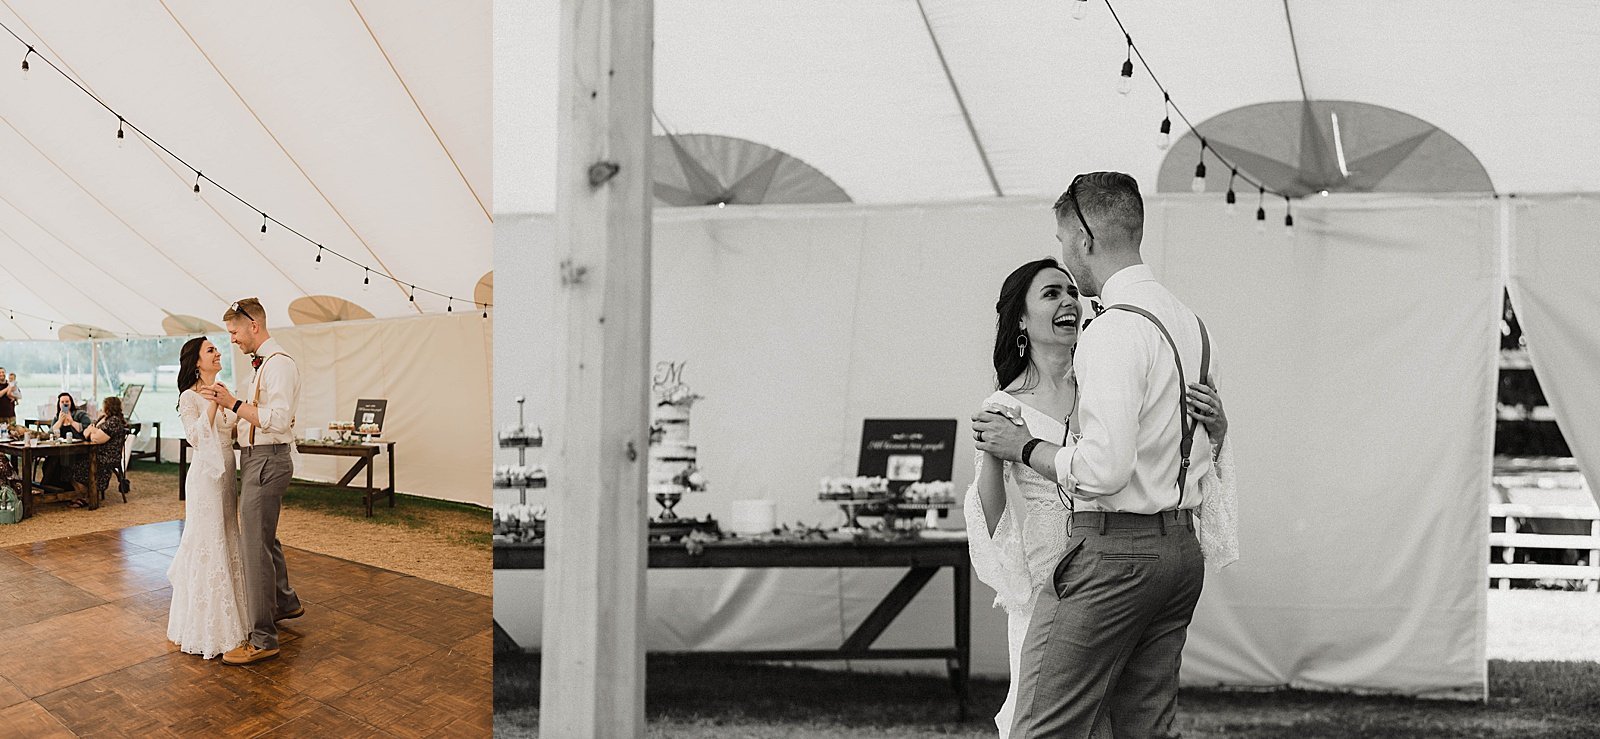  Newlyweds sharing a first dance at their reception by Alaska wedding photographer, Theresa McDonald.  